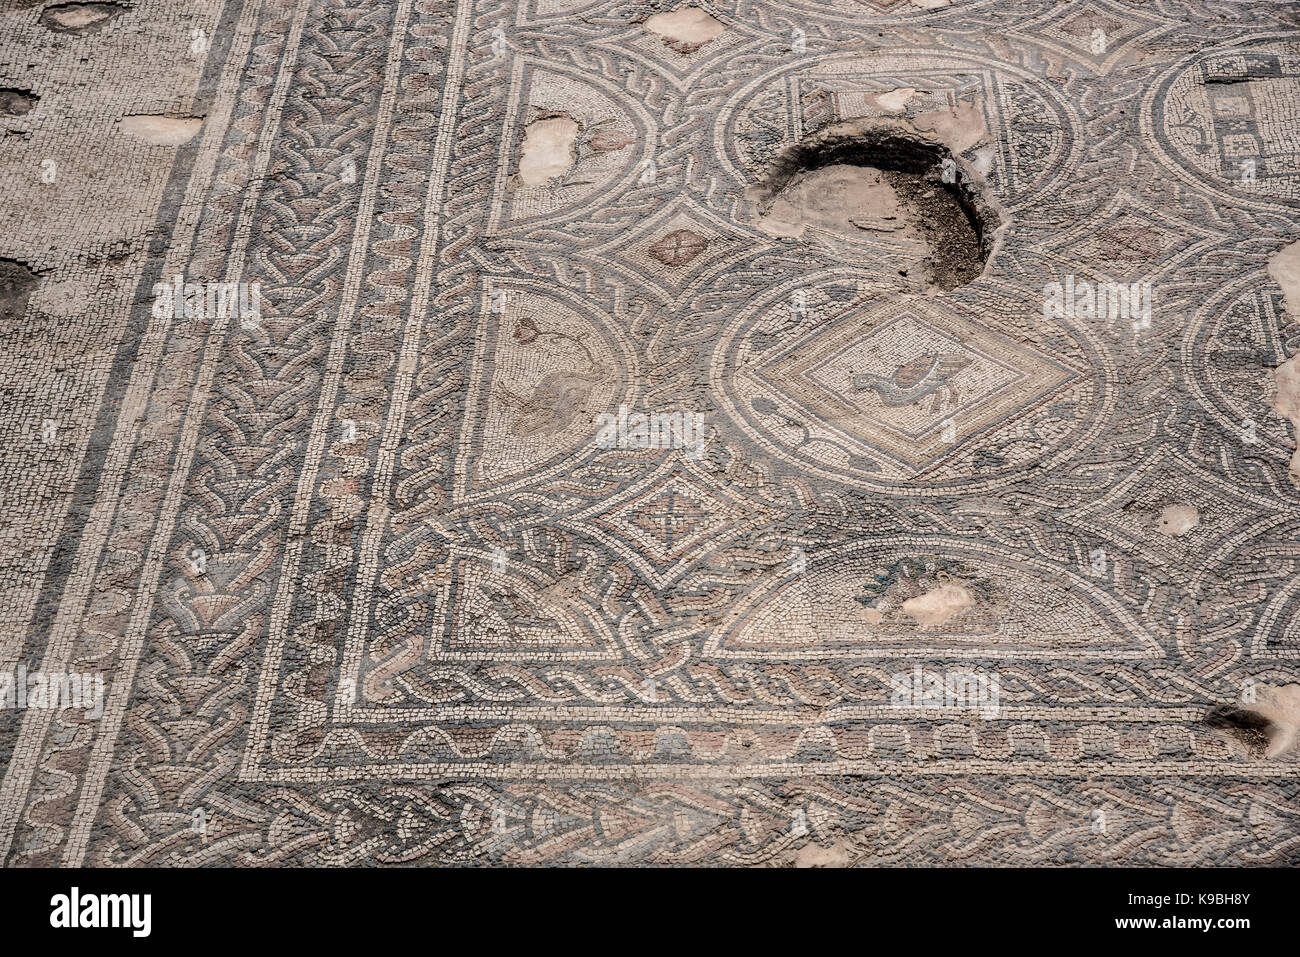 Israel, Lower Galilee, Zippori National Park The city of Zippori (Sepphoris) A Roman Byzantine period city with an abundance of mosaics Mosaic floor i Stock Photo